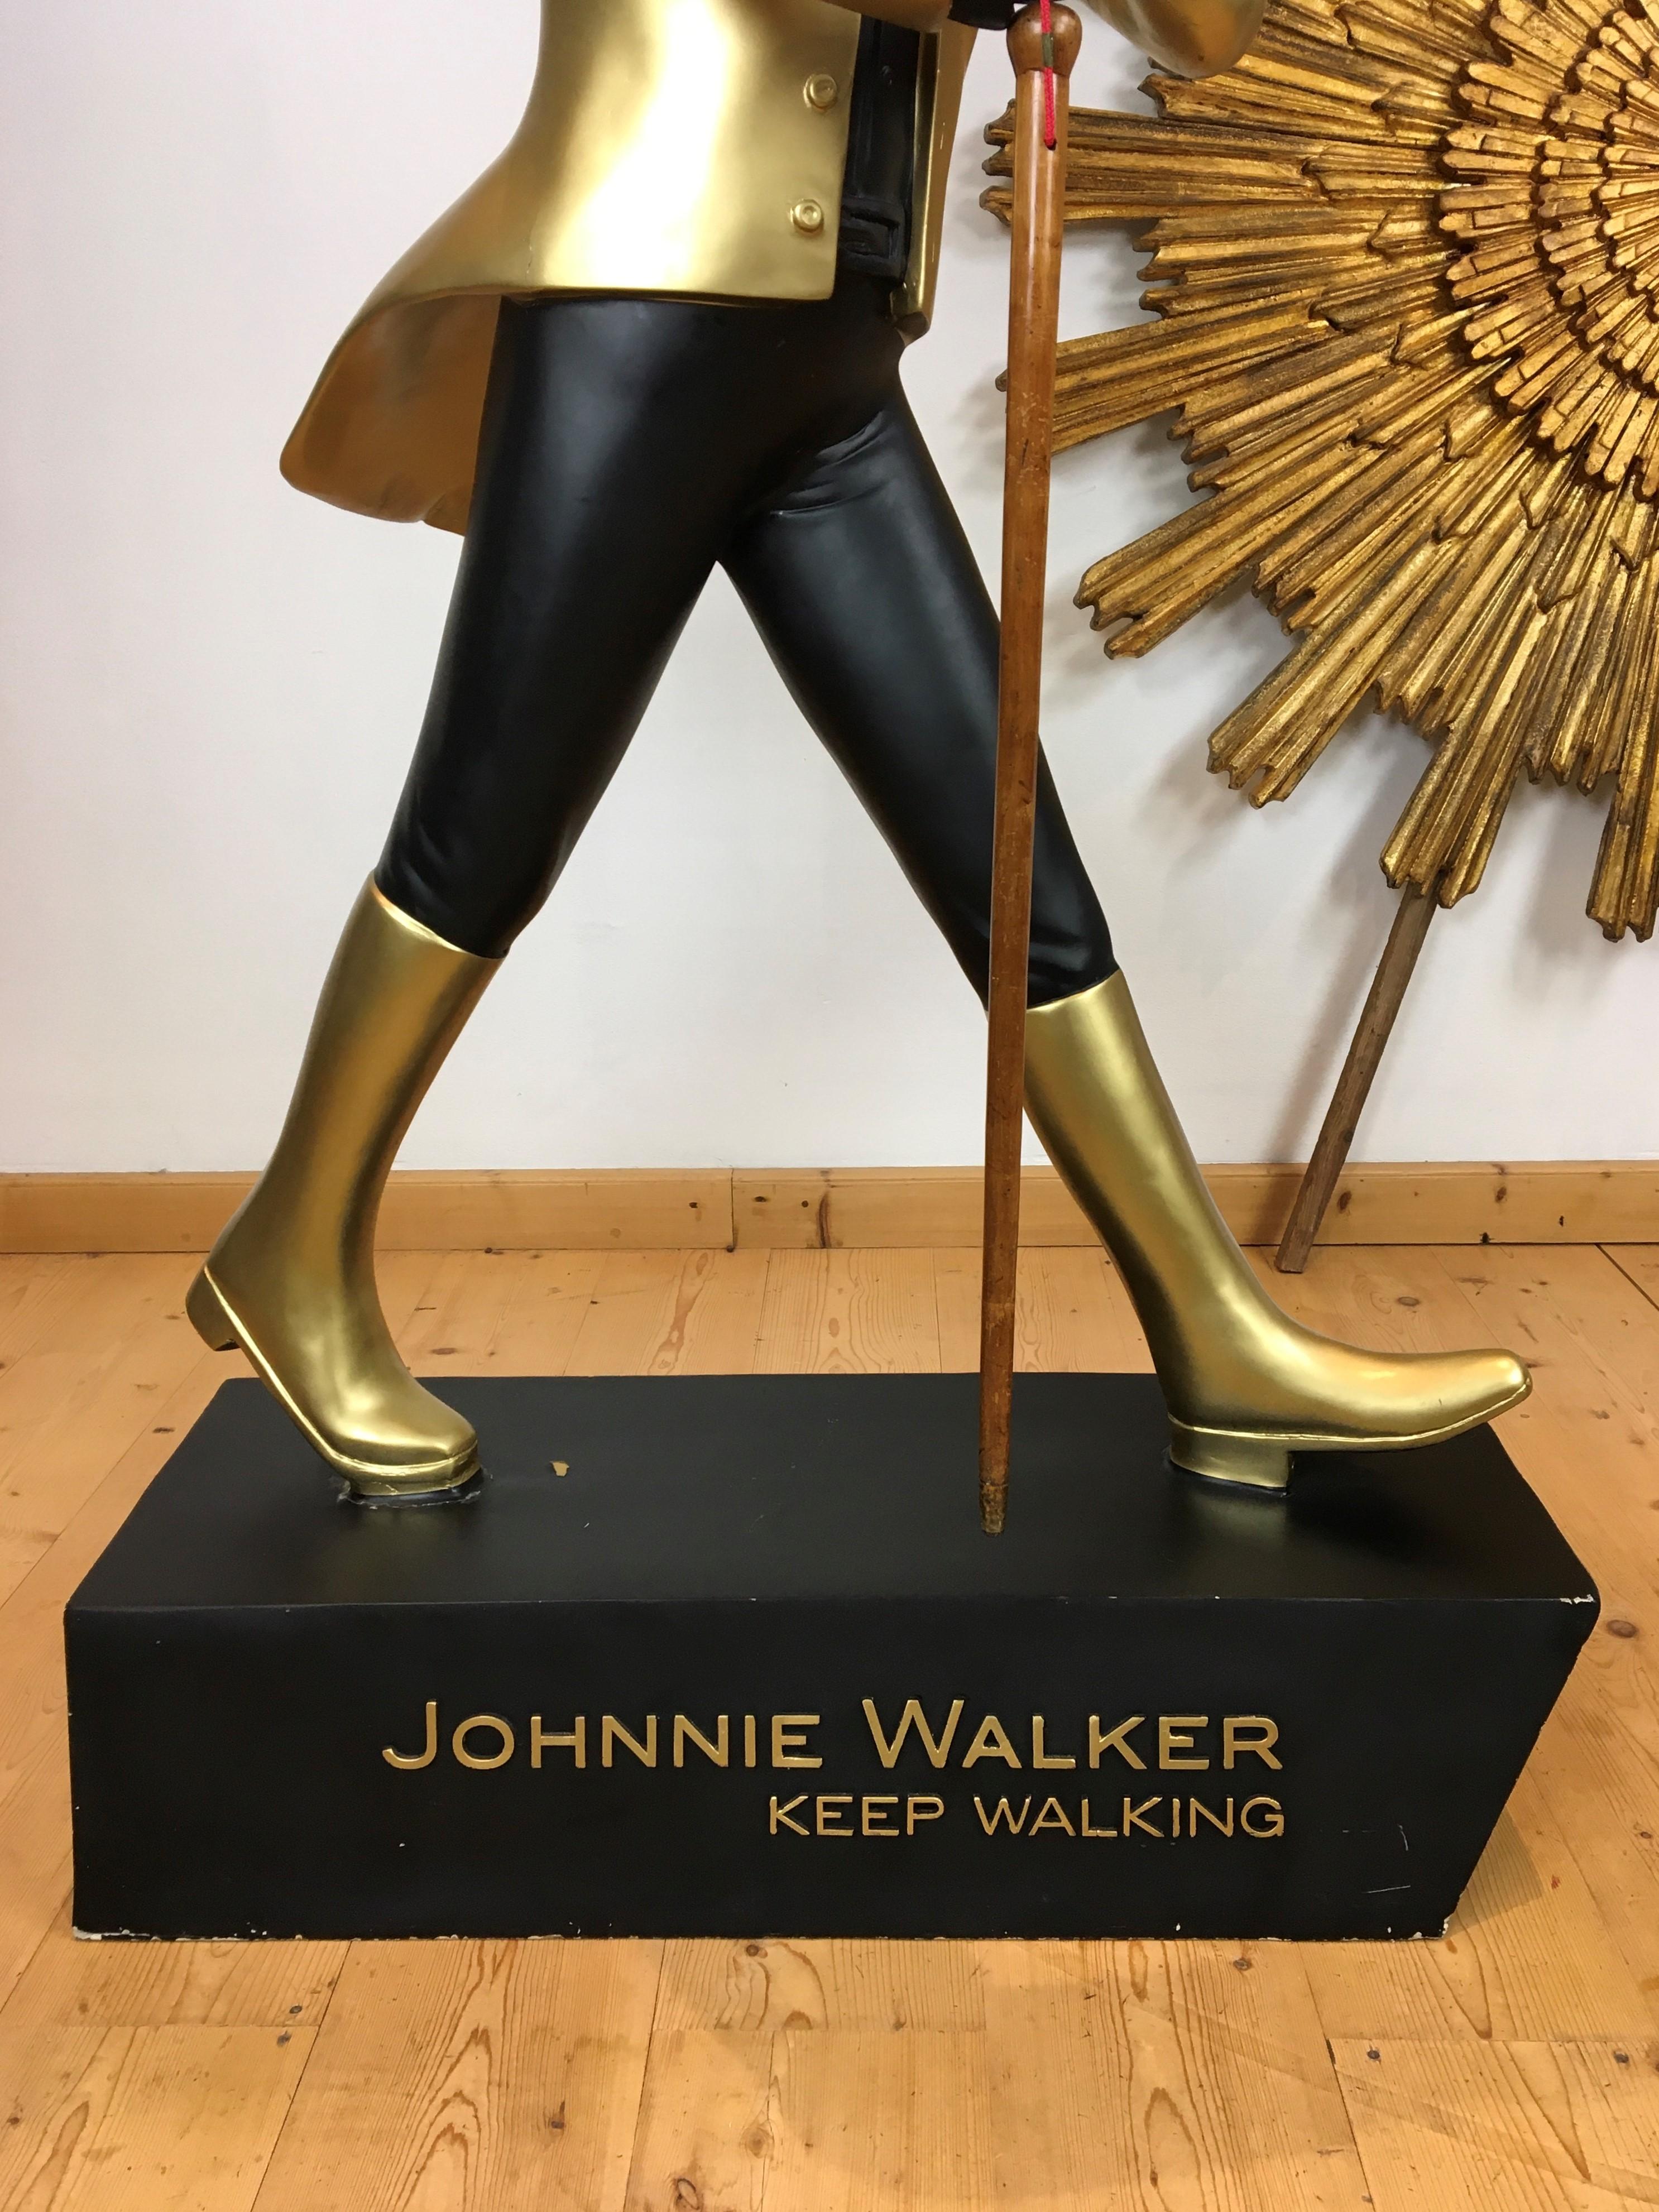 johnnie walker statue for sale